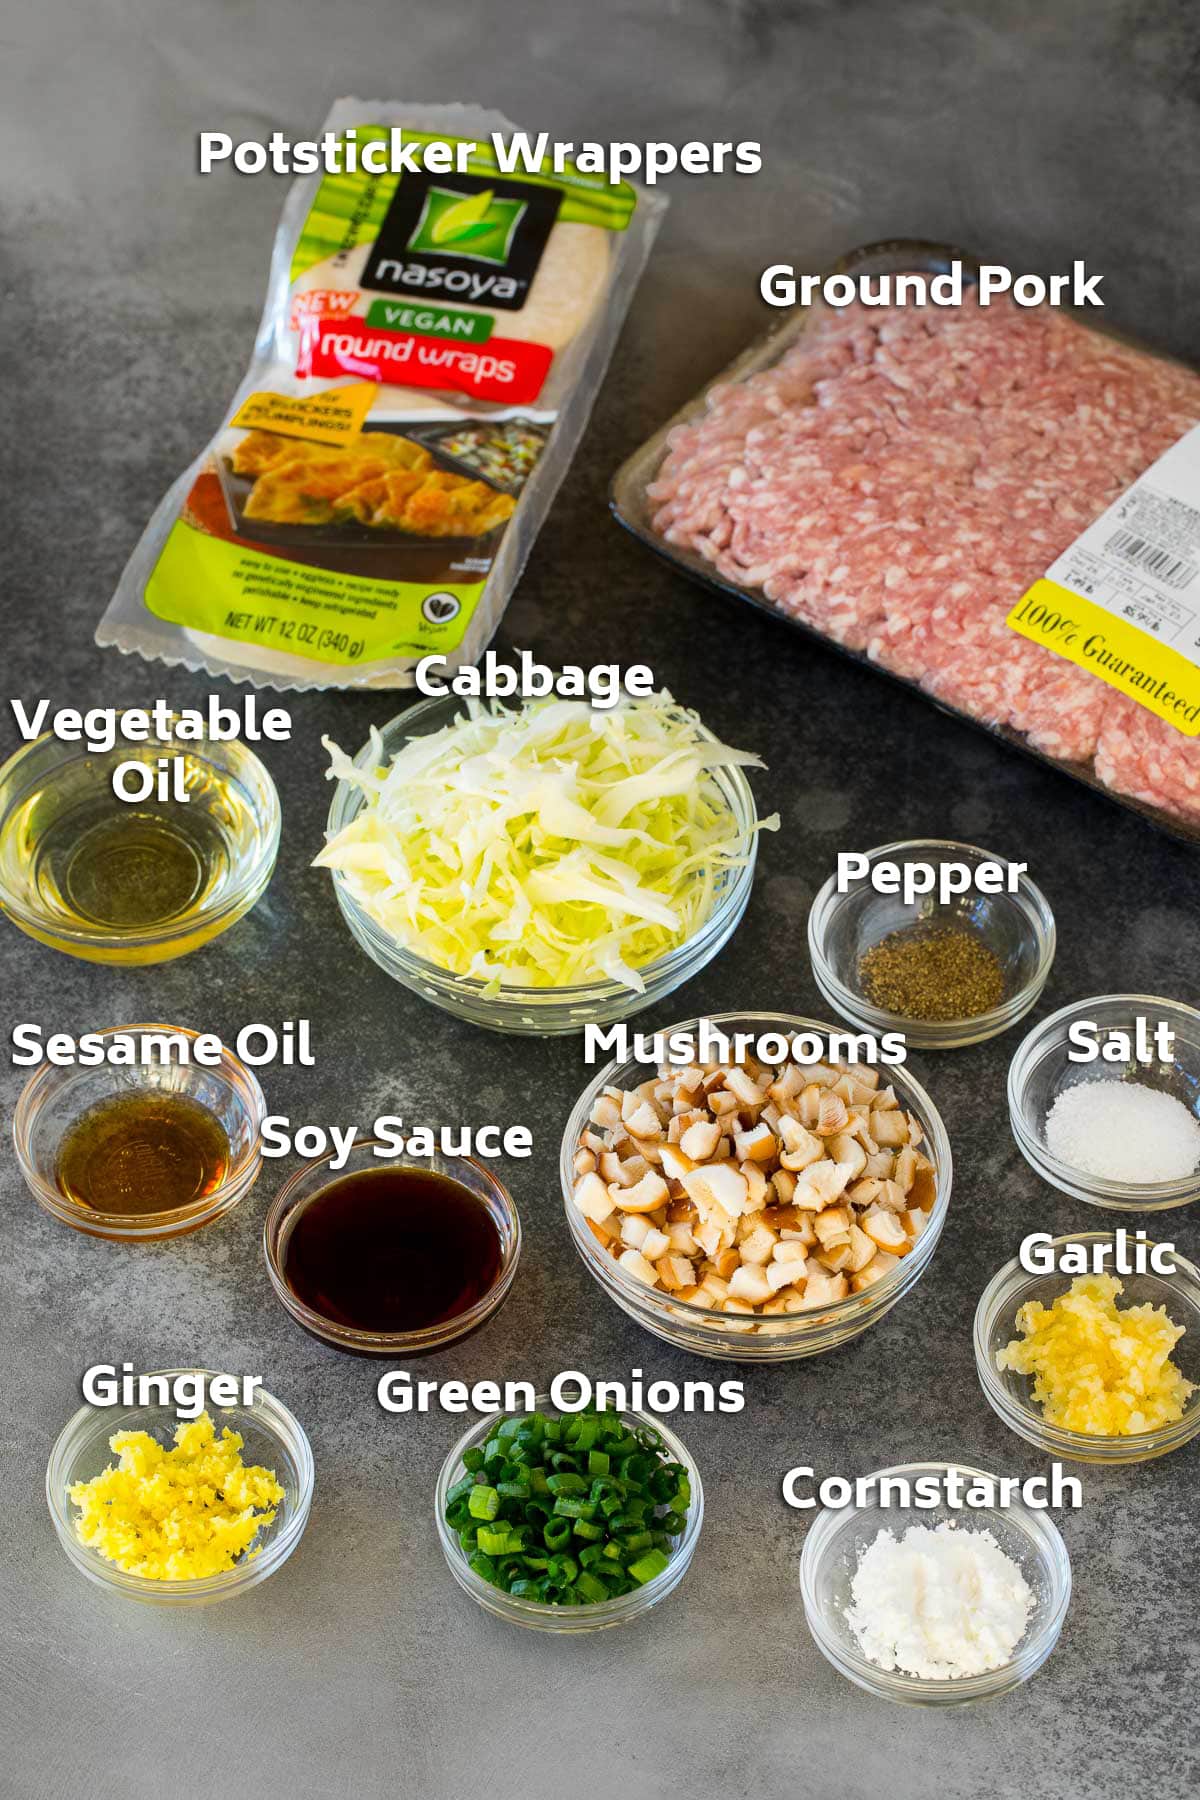 Ingredients to make dumplings including ground pork, vegetables, seasonings and spices.